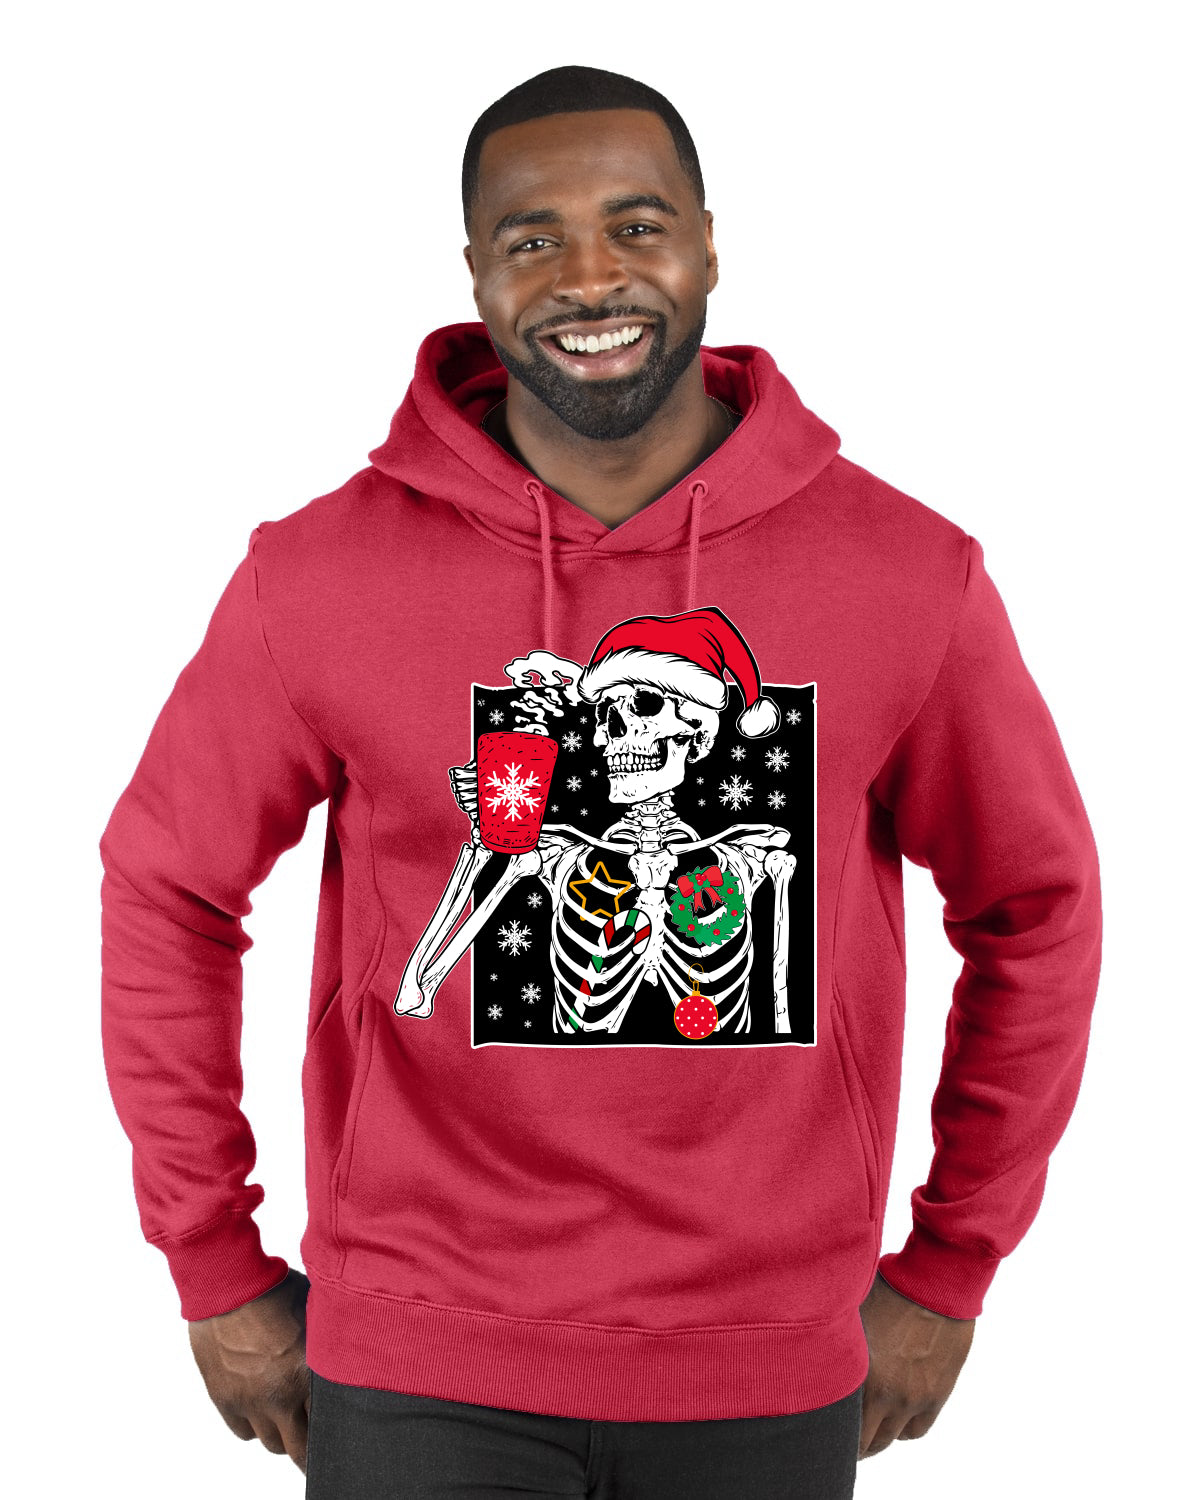 When You're Dead Inside But It's Christmas Christmas Premium Graphic Hoodie Sweatshirt